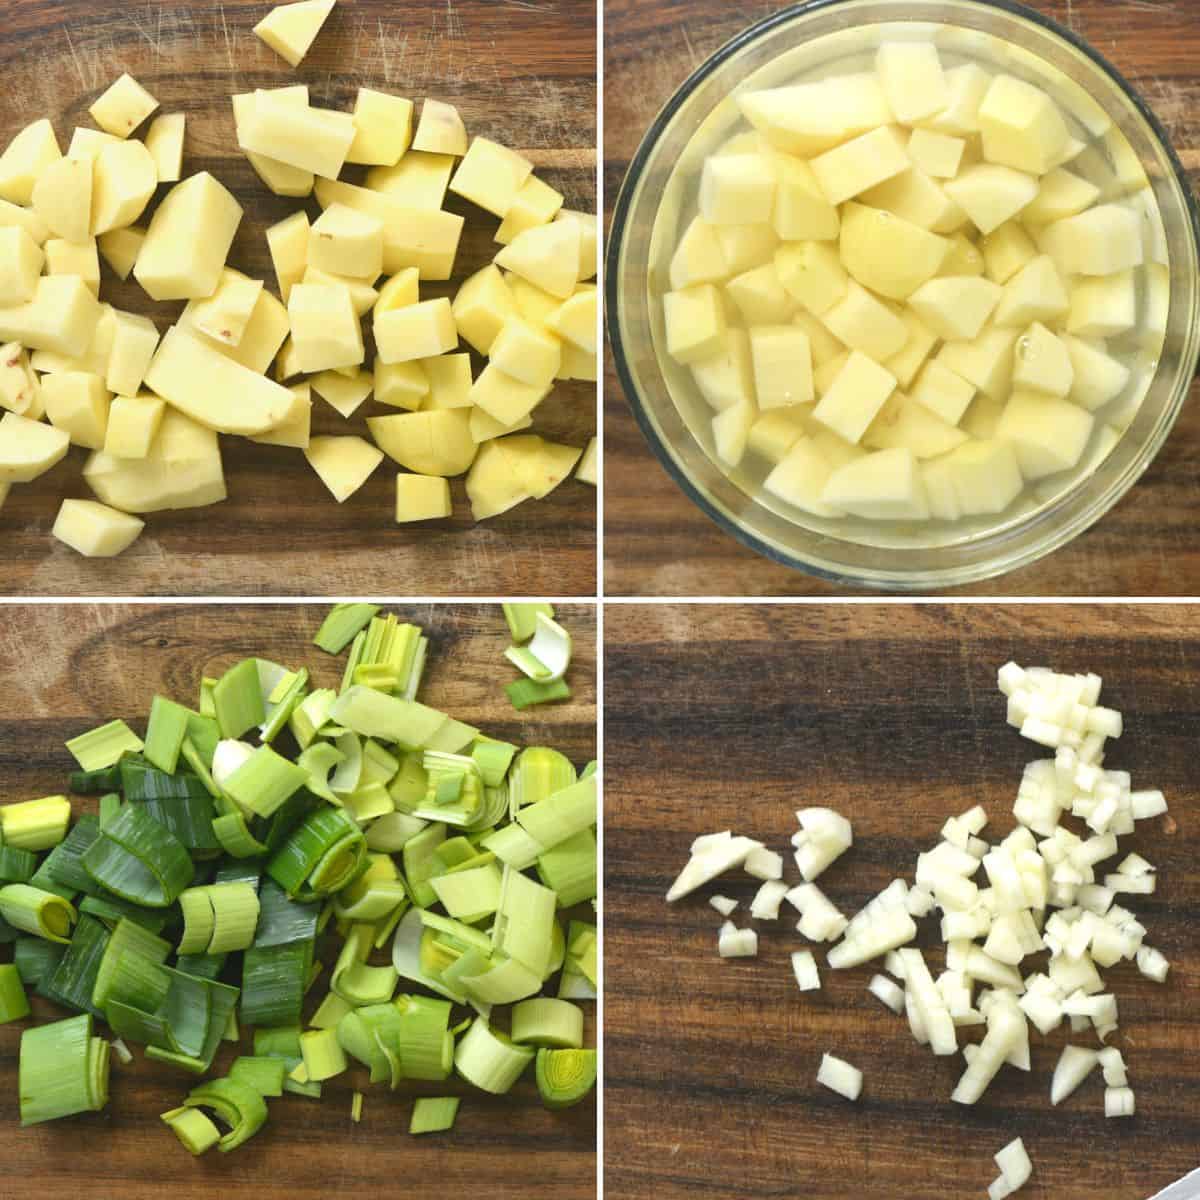 Chopped potatoes, leek and minced garlic